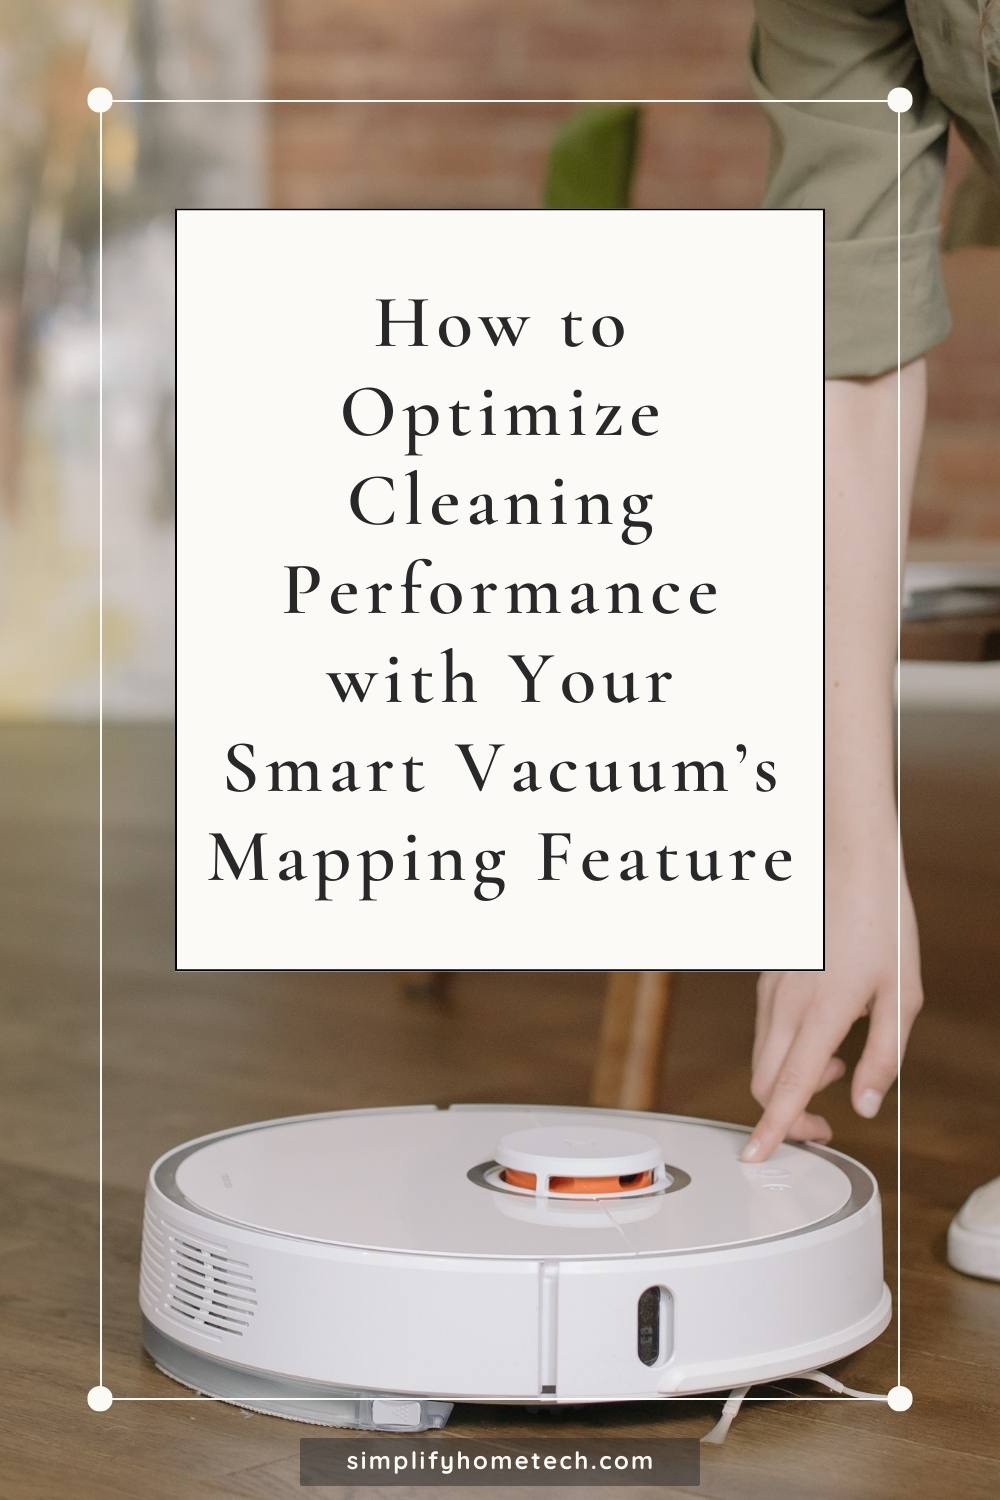 Smart Vacuum Mapping